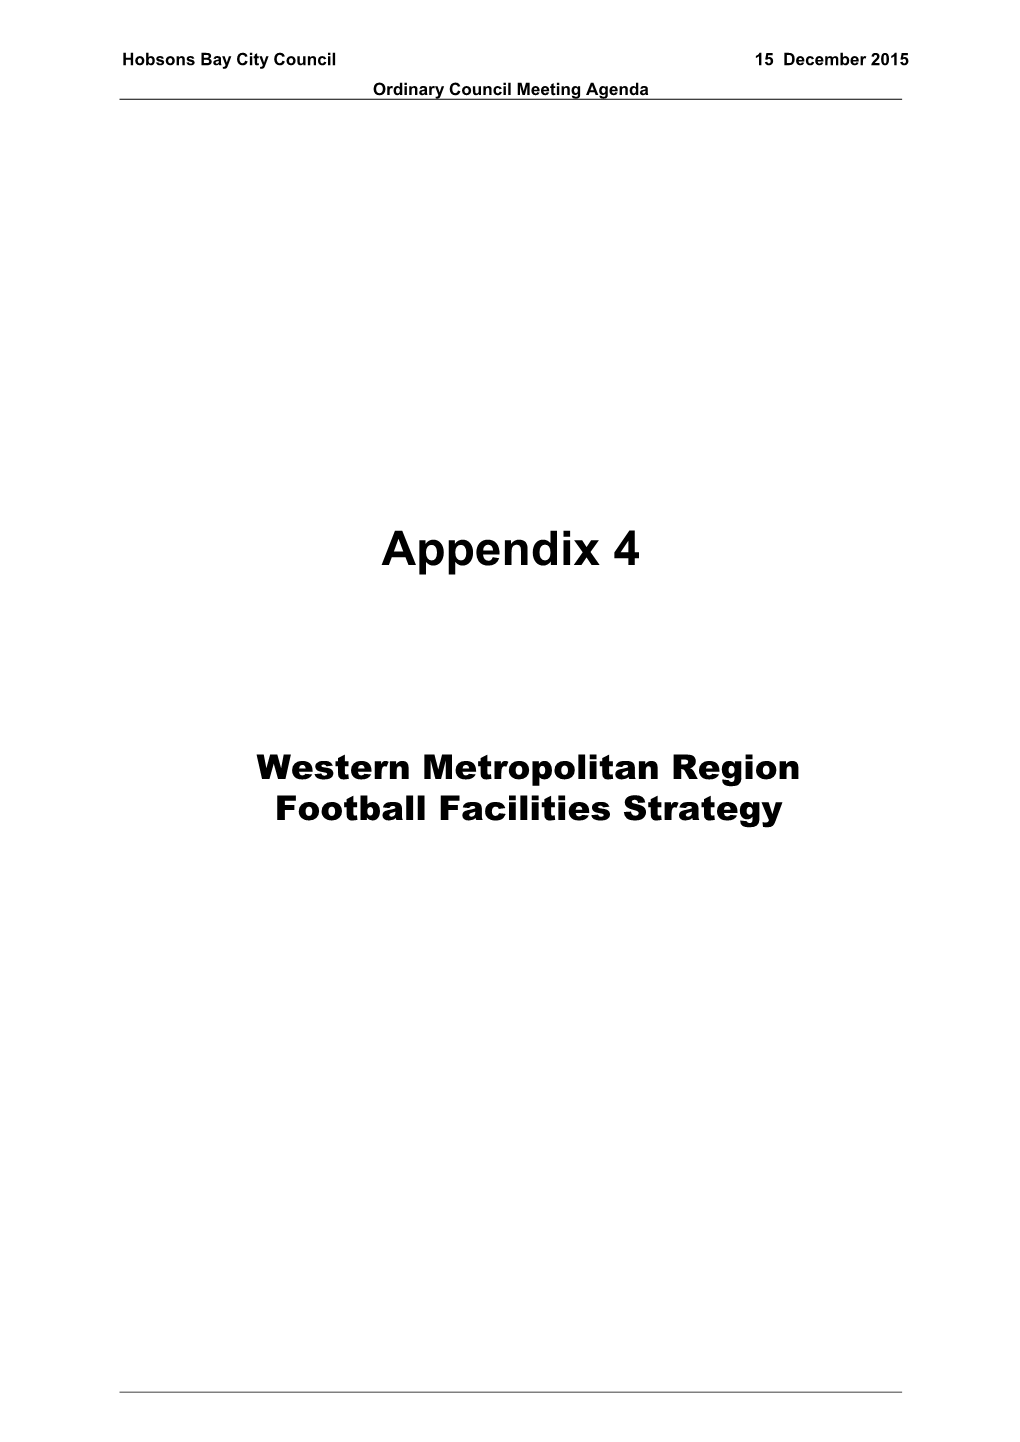 Western Metropolitan Region Football Facilities Strategy WESTERN METROPOLITAN REGION FOOTBALL FACILITIES STRATEGY DRAFT STRATEGY | SEPTEMBER 2015